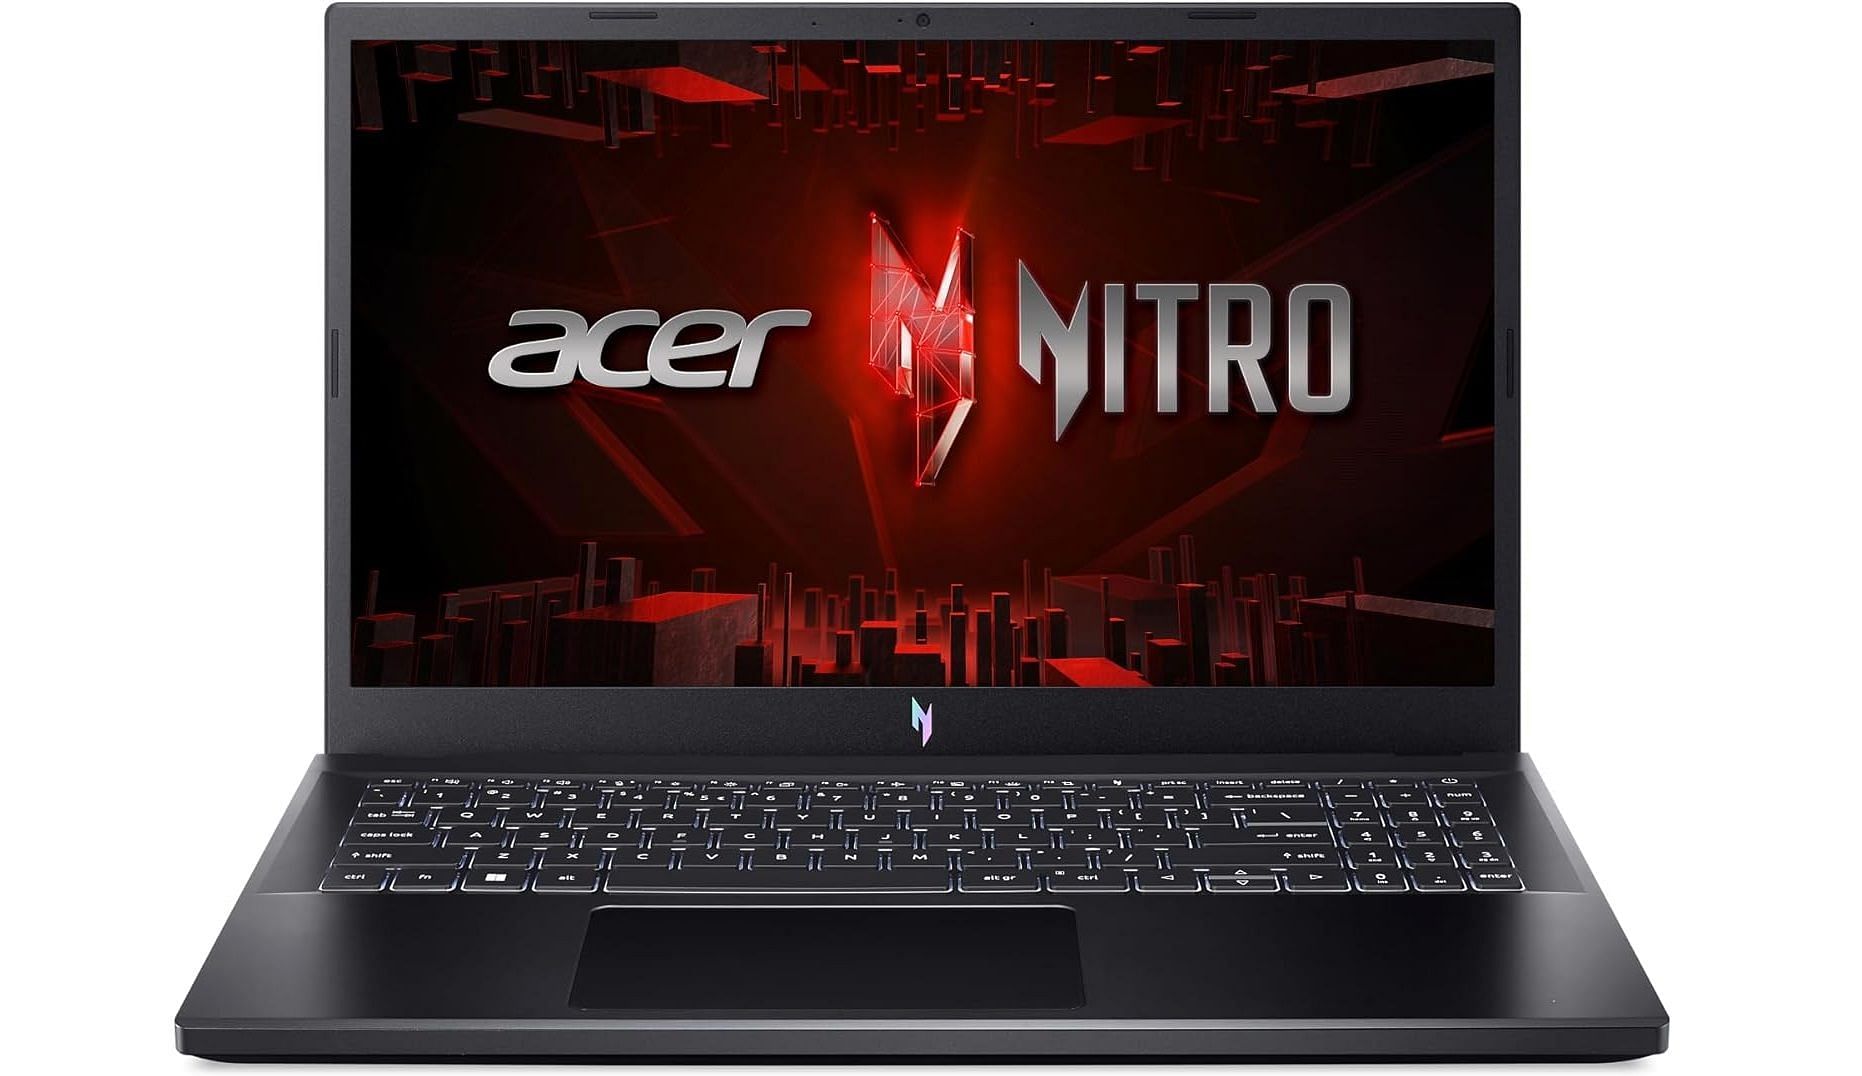 Acer Nitro V gaming laptop (Image via Acer)